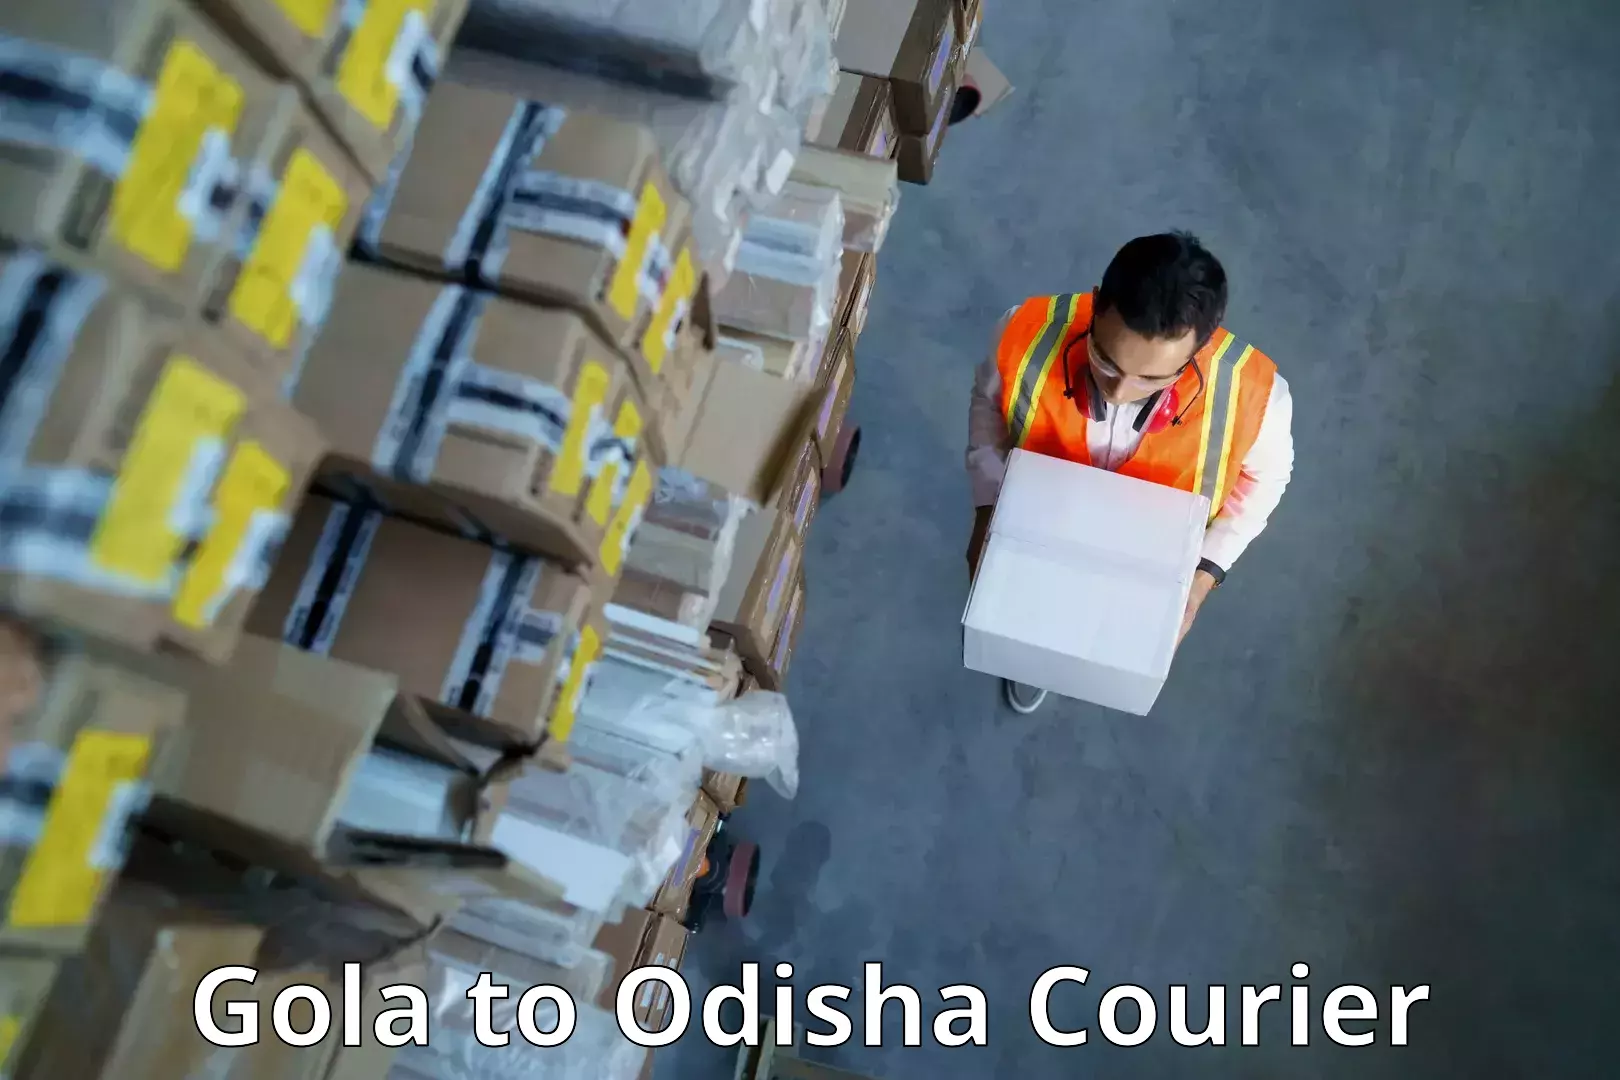 Courier service comparison Gola to Kotapad